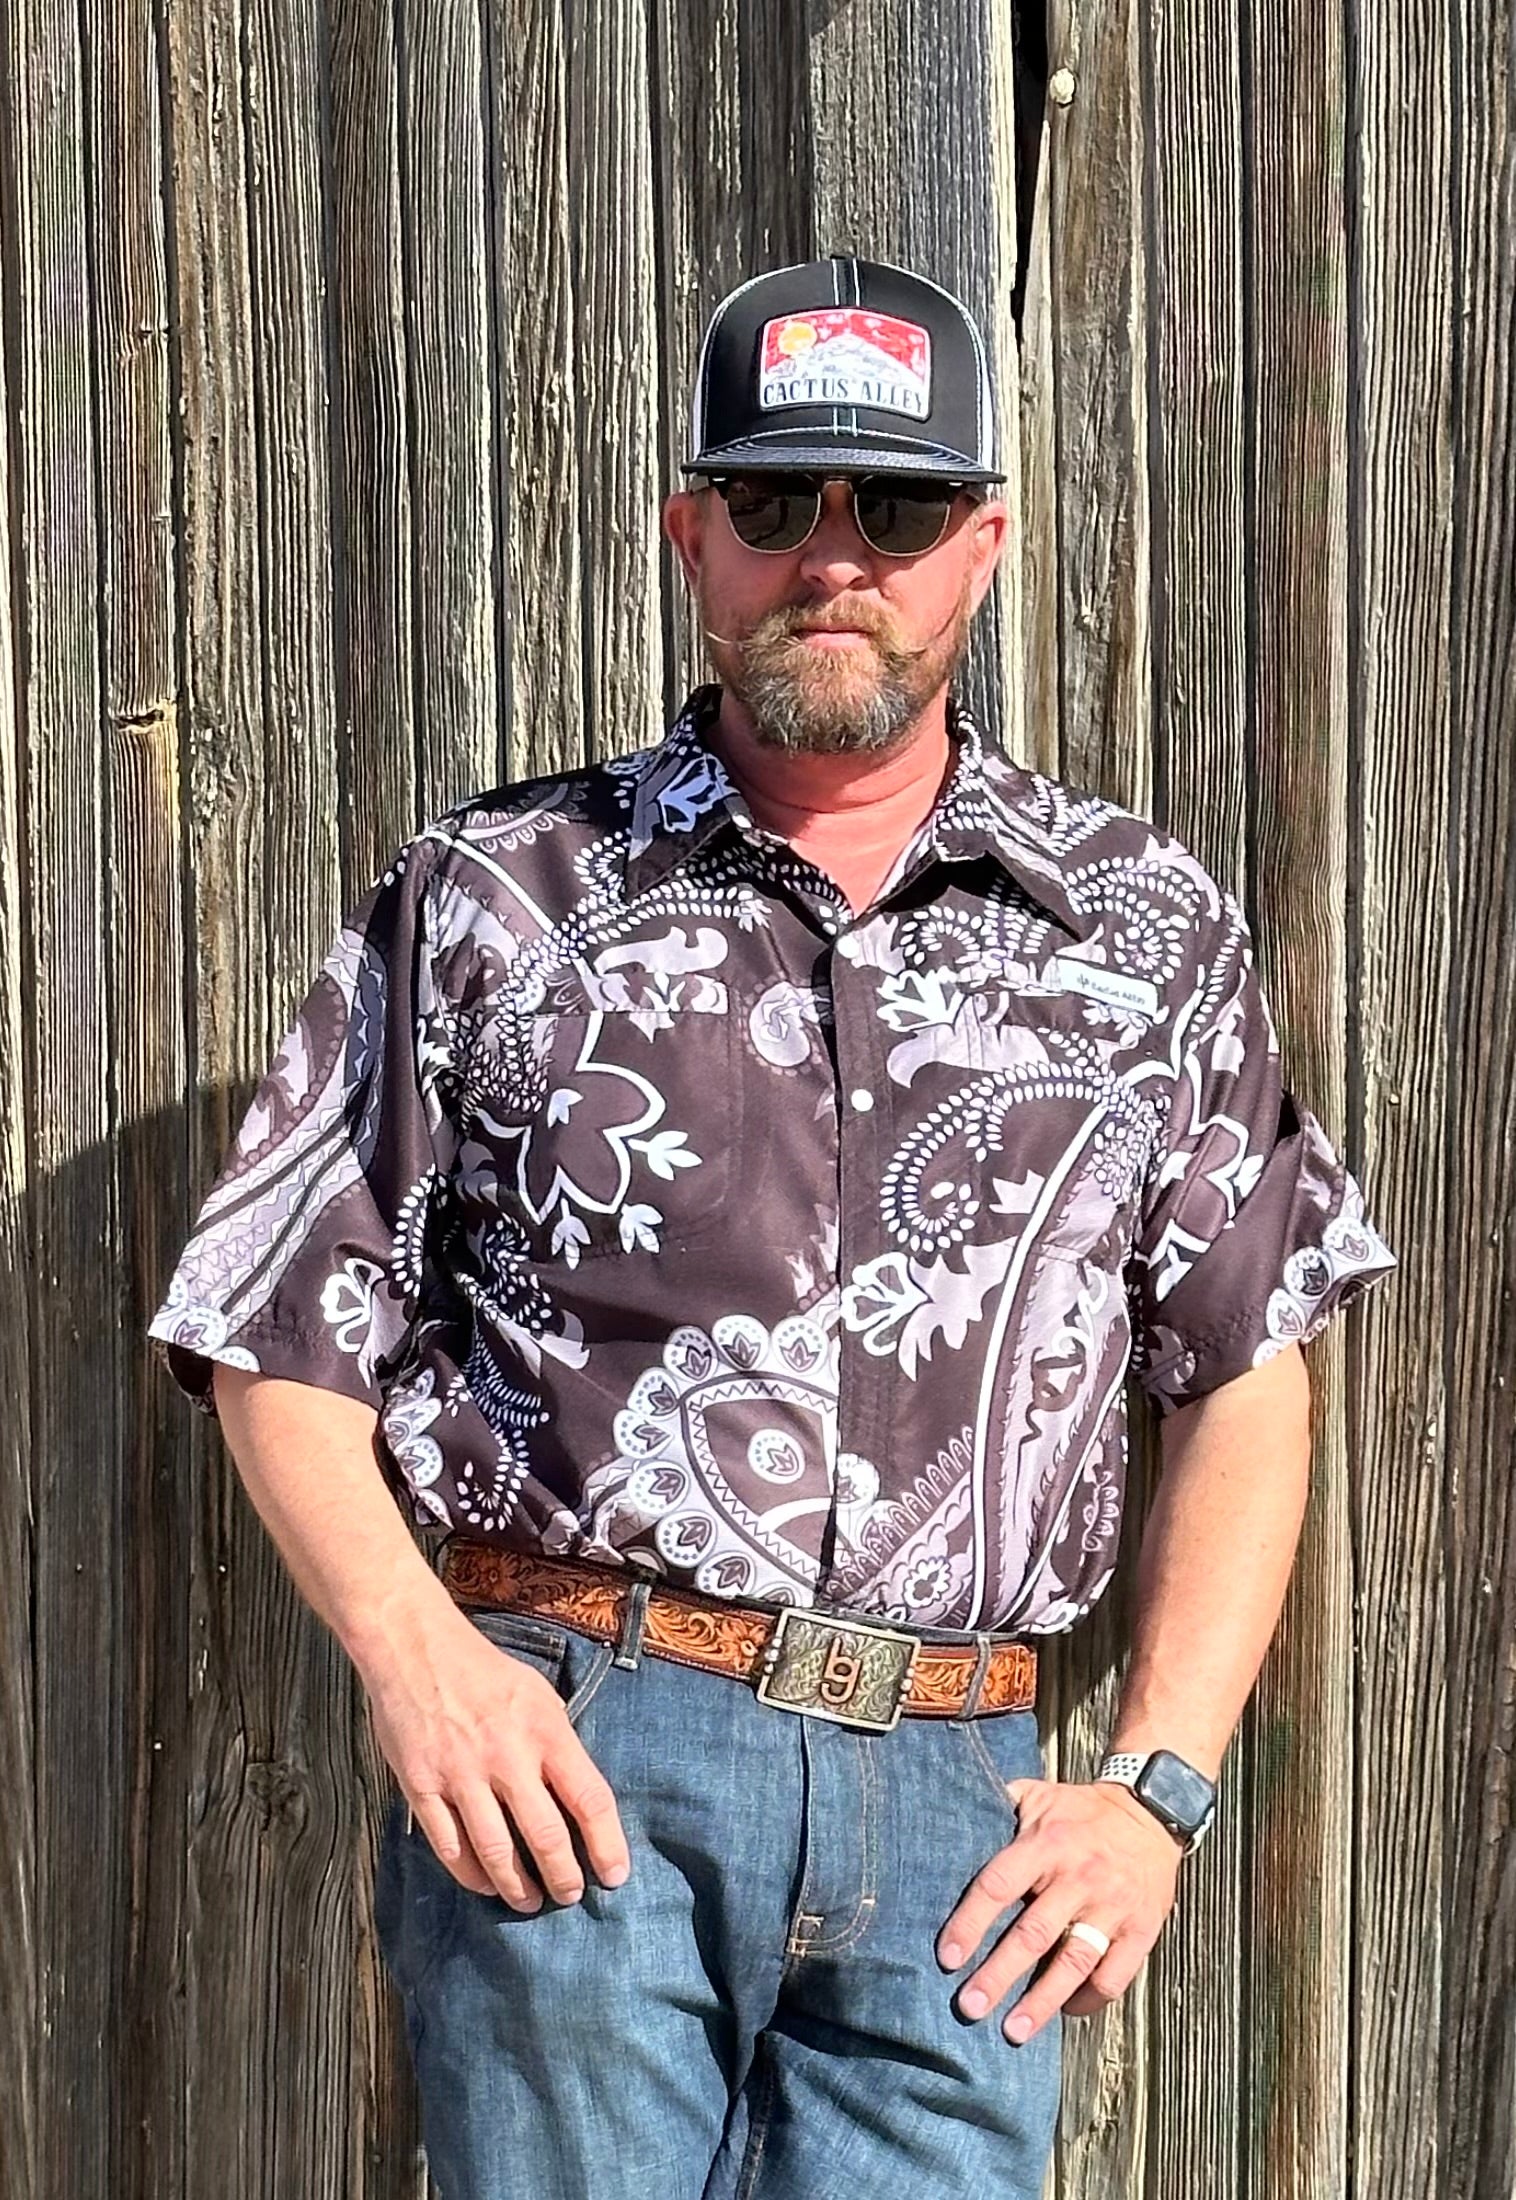 Wyatt EARP - Cactus Alley Fishing Shirt Medium